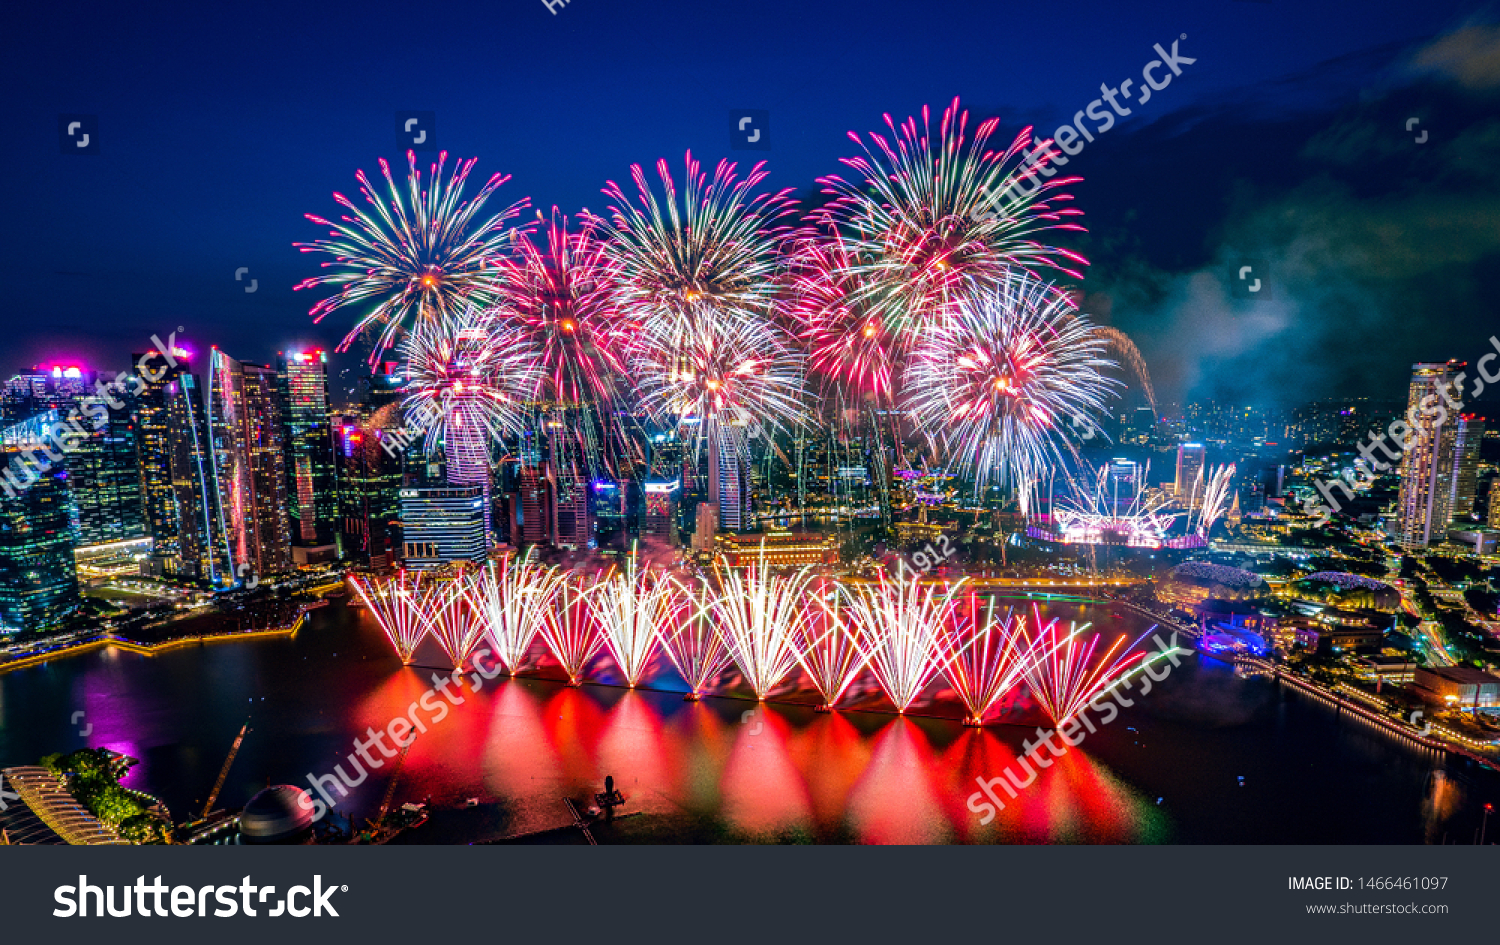 Singapore July 2019 Ndp Rehearsal Firework Stock Photo Edit Now 1466461097 [ 945 x 1500 Pixel ]